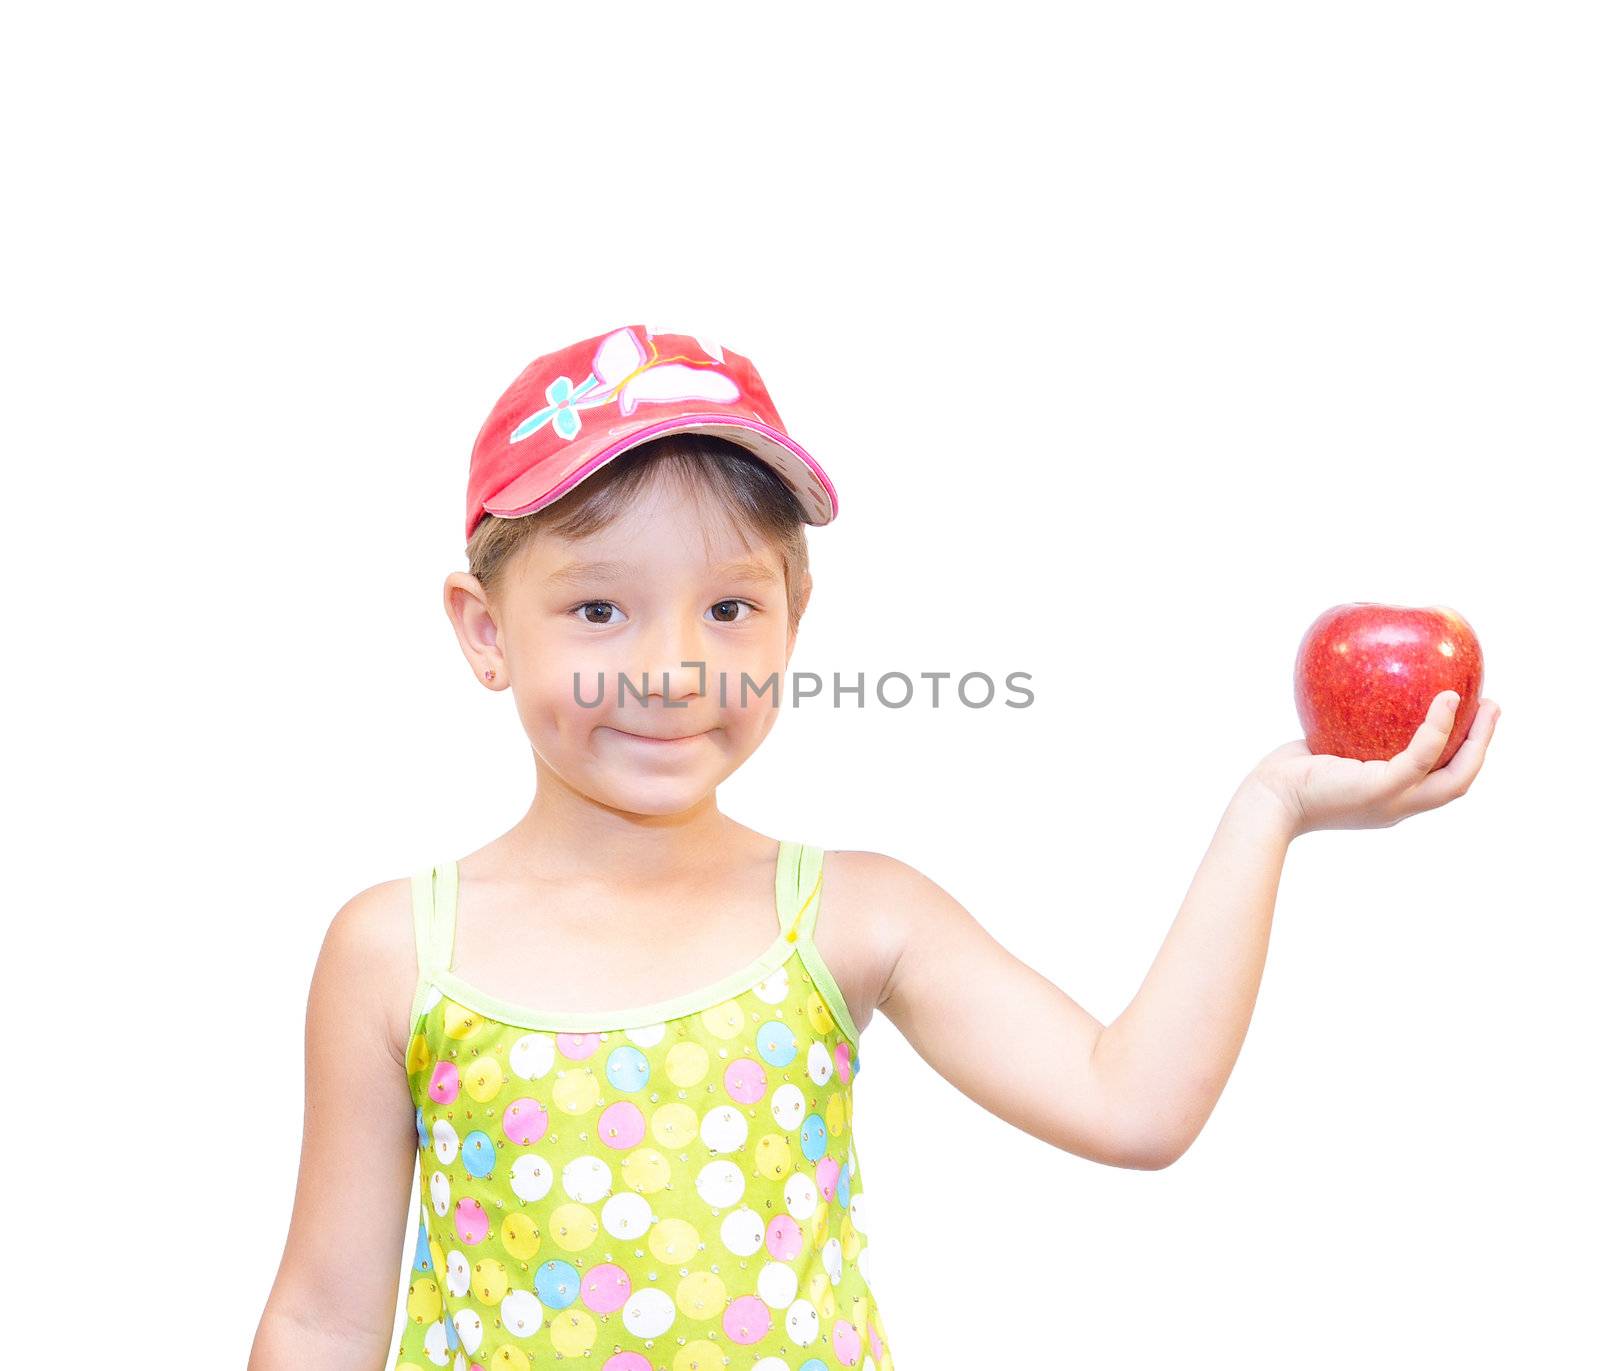 The Child and apple by kusamusa